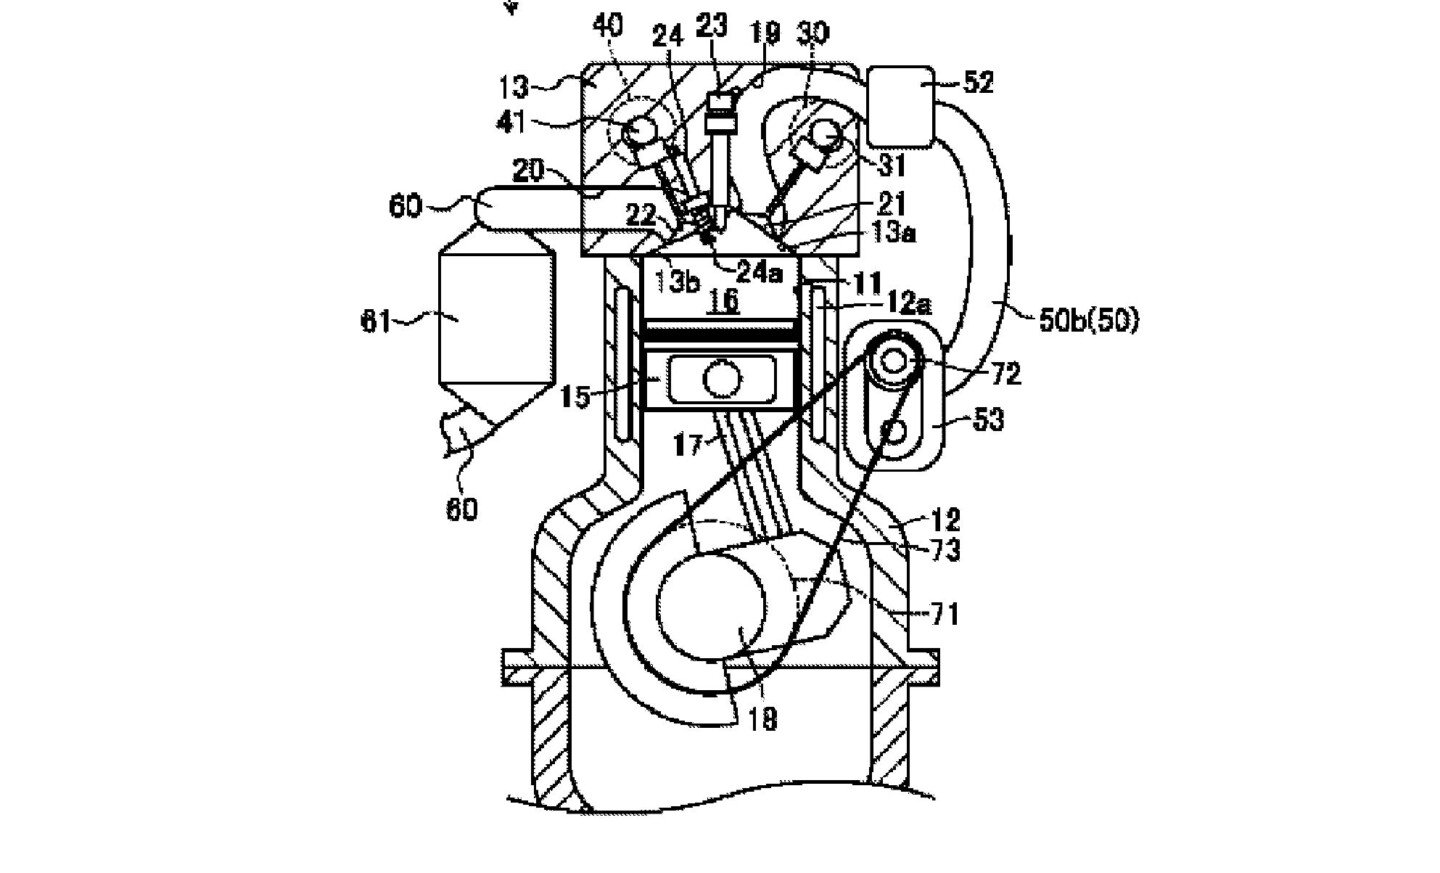 Patent US 2022/0034265 A1